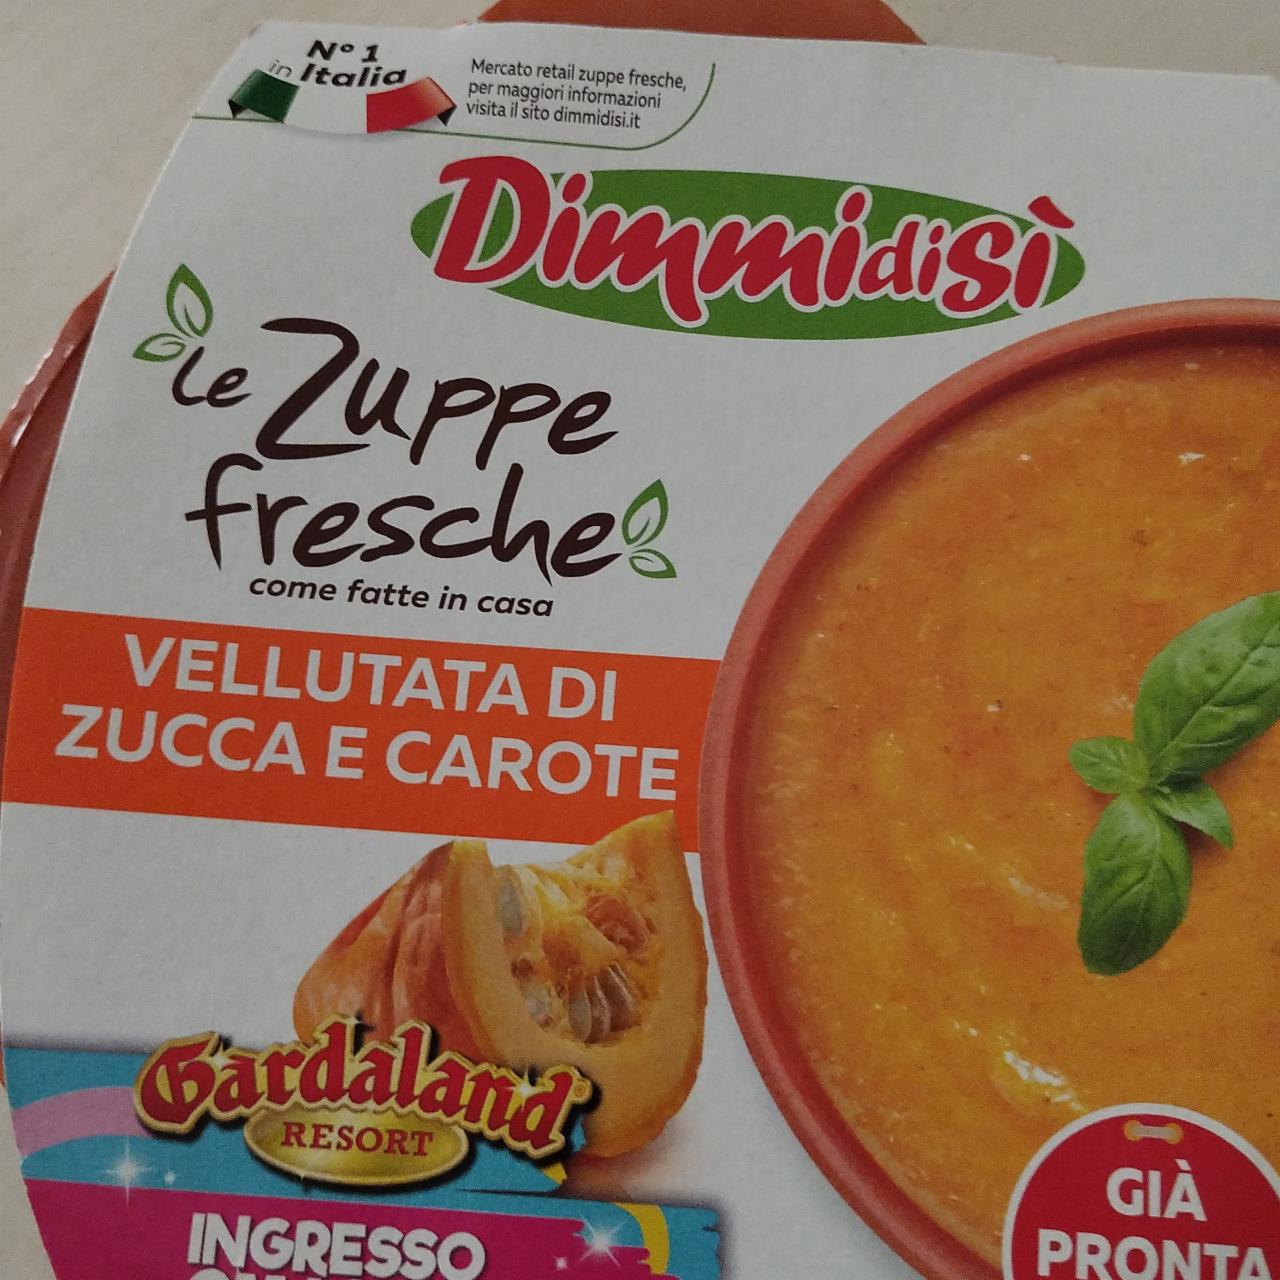 Fotografie - Le Zuppe fresche Vellutata di zucca e carote Dimmidisi